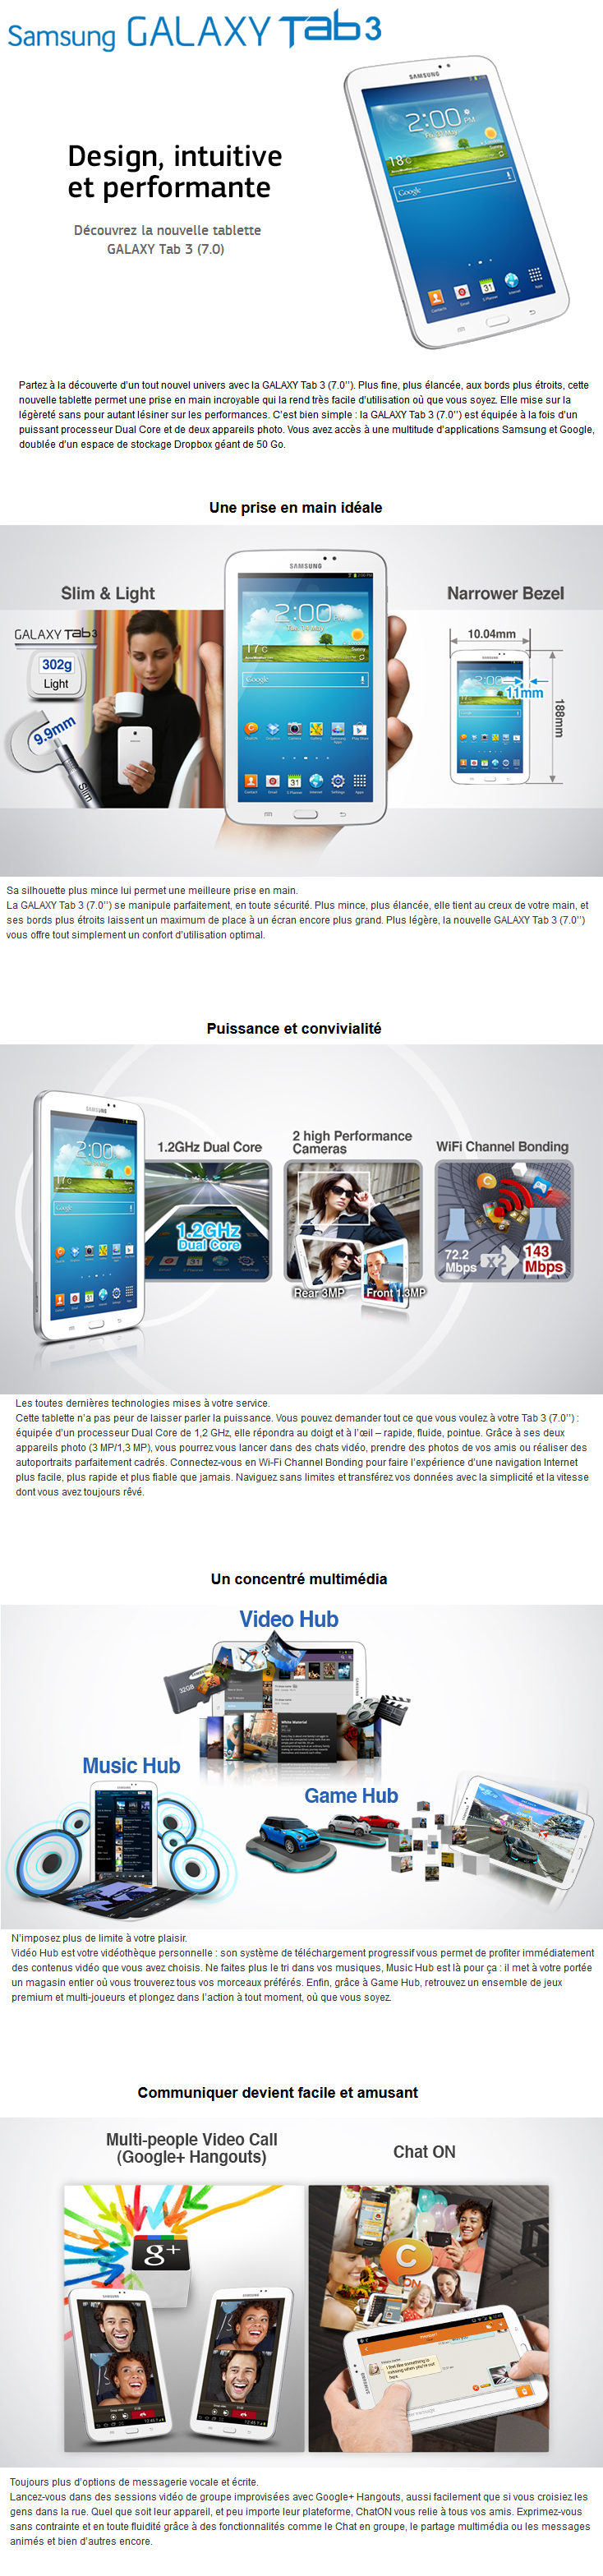 Acheter Samsung GALAXY Tab 3 (7.0) Maroc